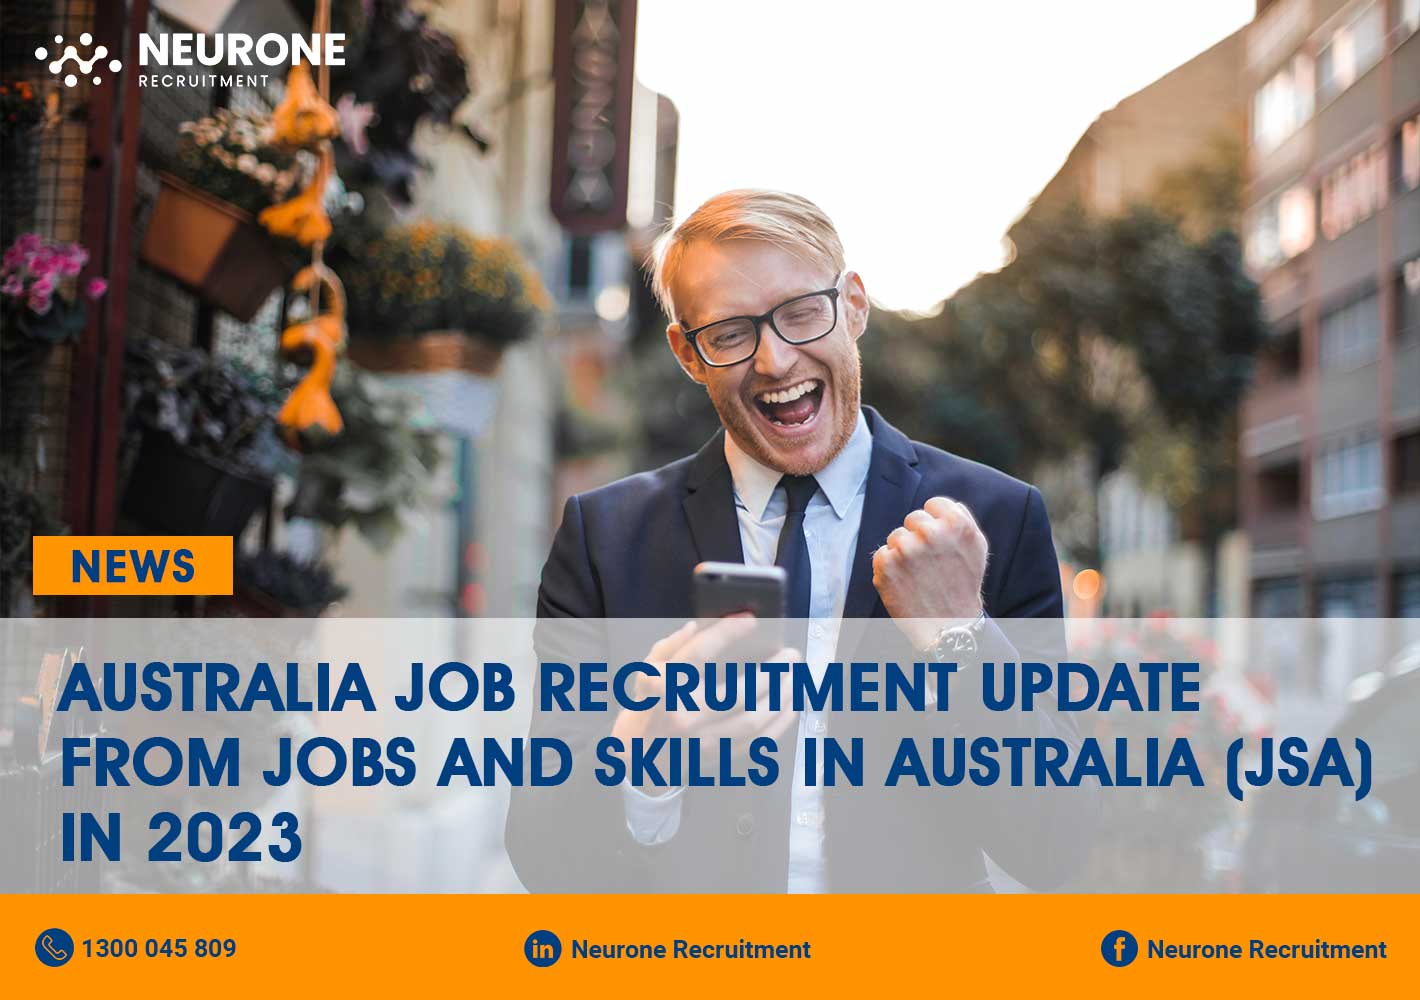 Australia Job Recruitment Update from Jobs and Skills in Australia (JSA) in 2023